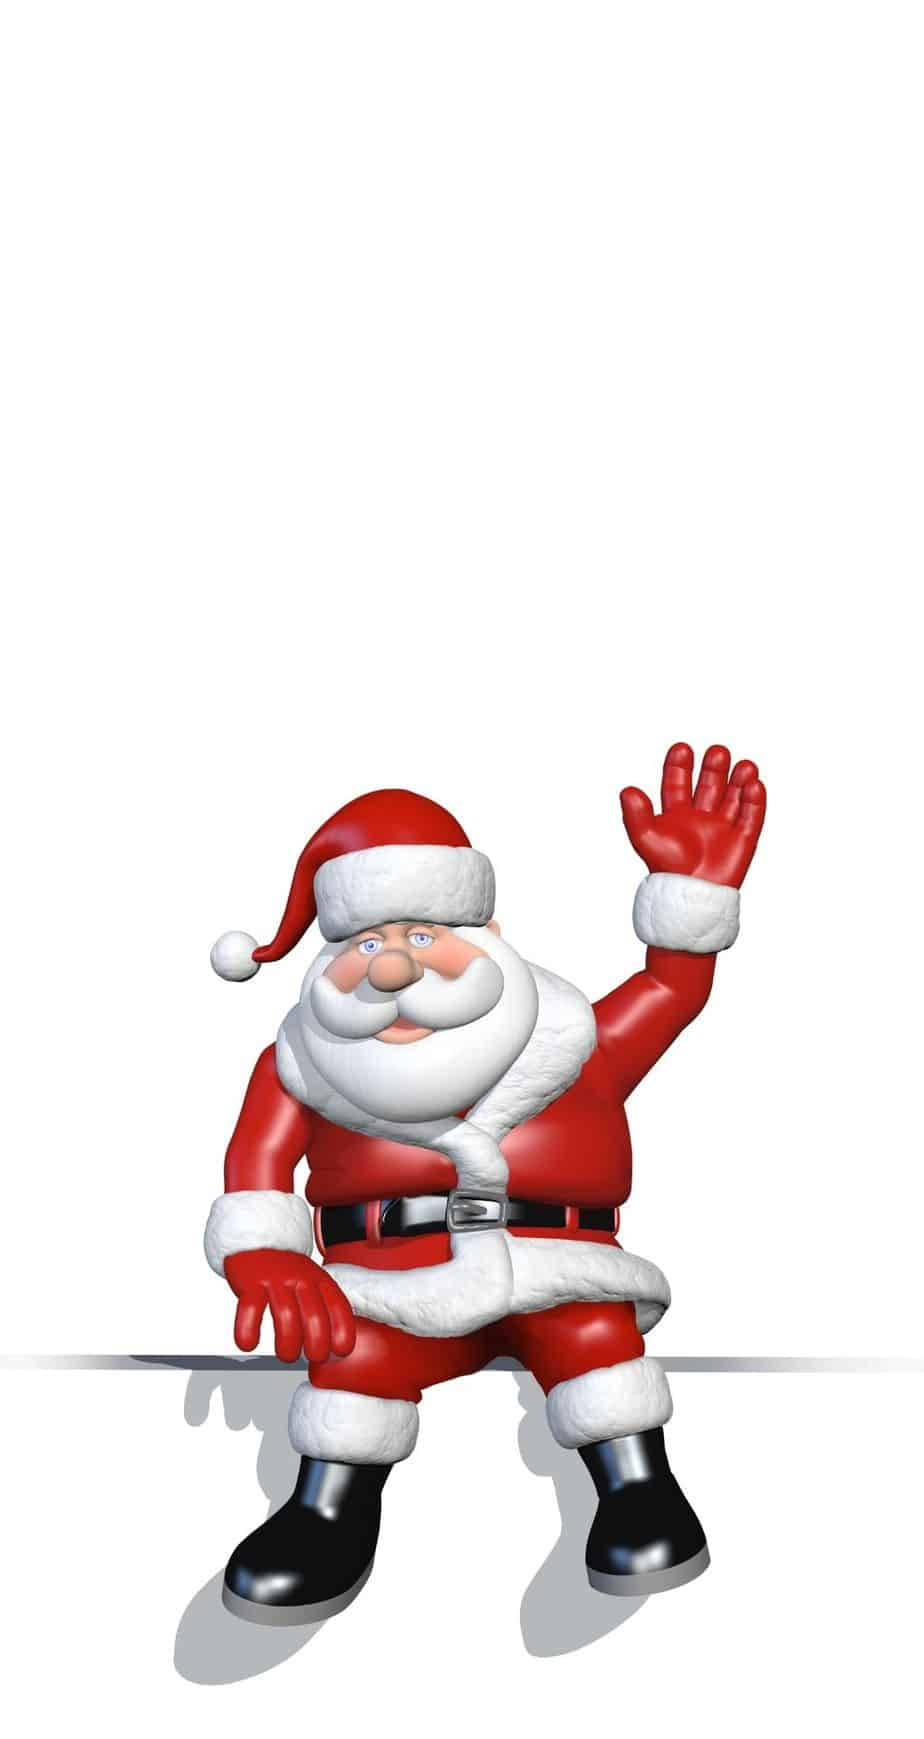 Greeting Santa Claus Christmas Iphone Background